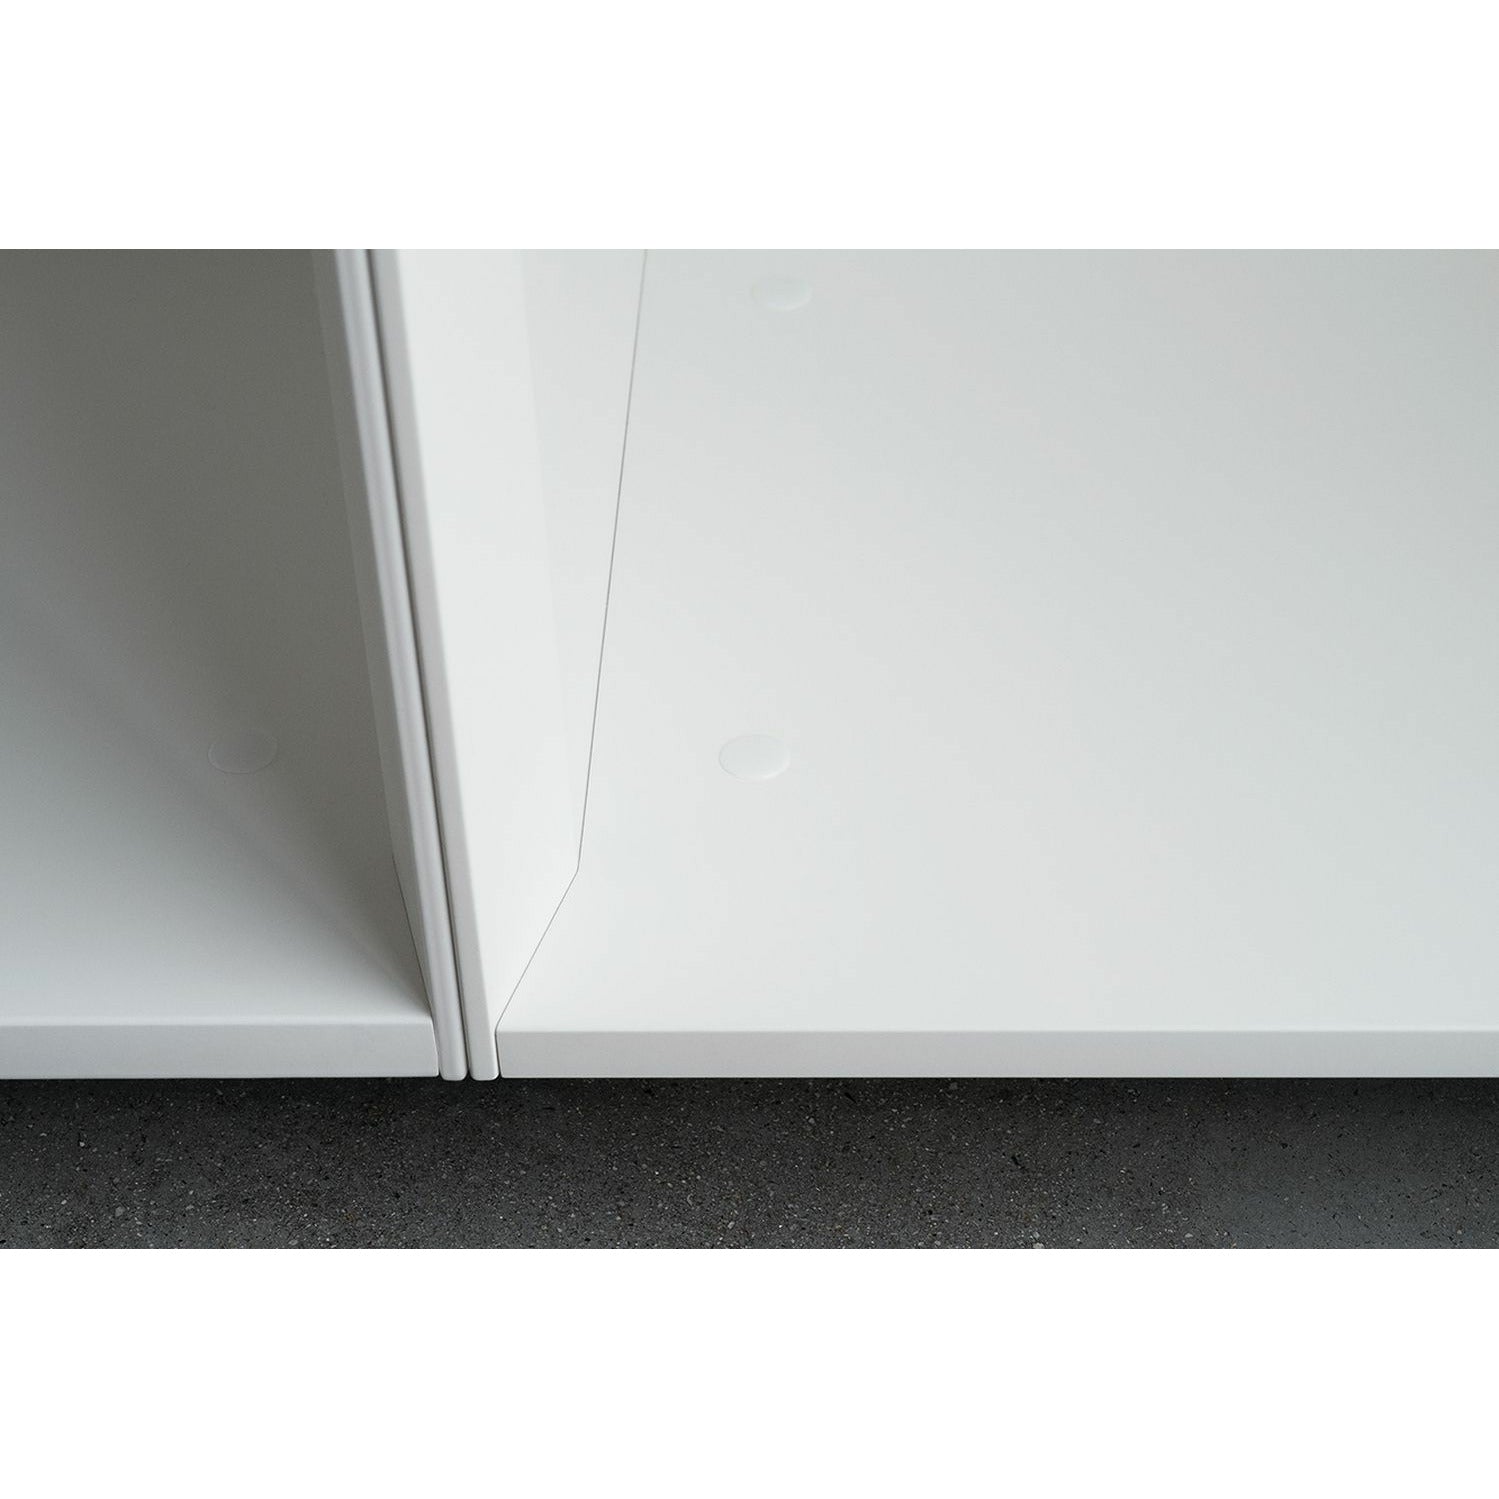 Piure Nex Pur Shelf Cabinet HXB 211,5x50 cm 5 hyllor, konsoler till höger